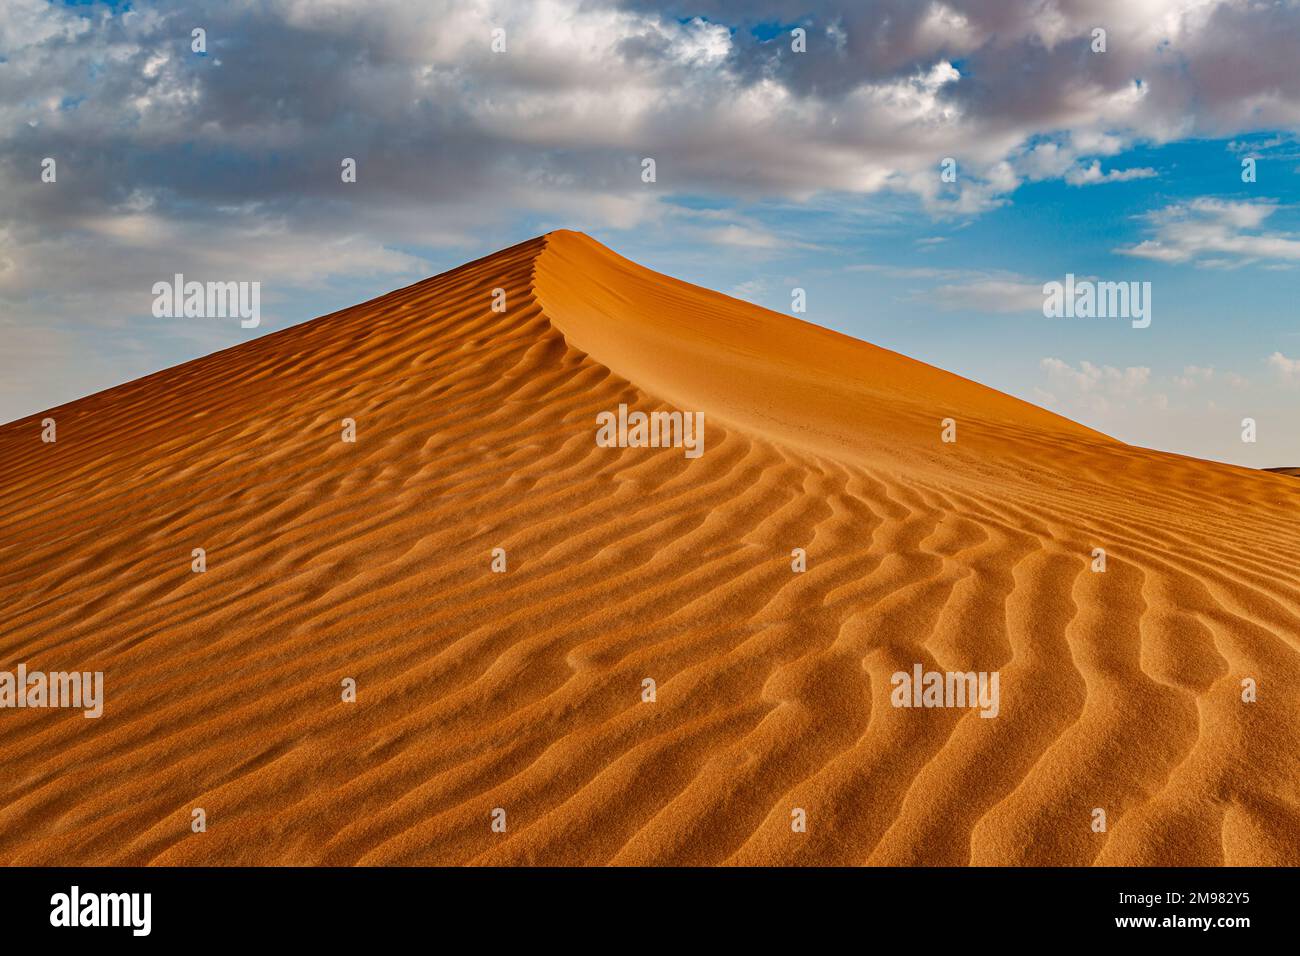 Sand dune in desert landscape, Saudi Arabia Stock Photo